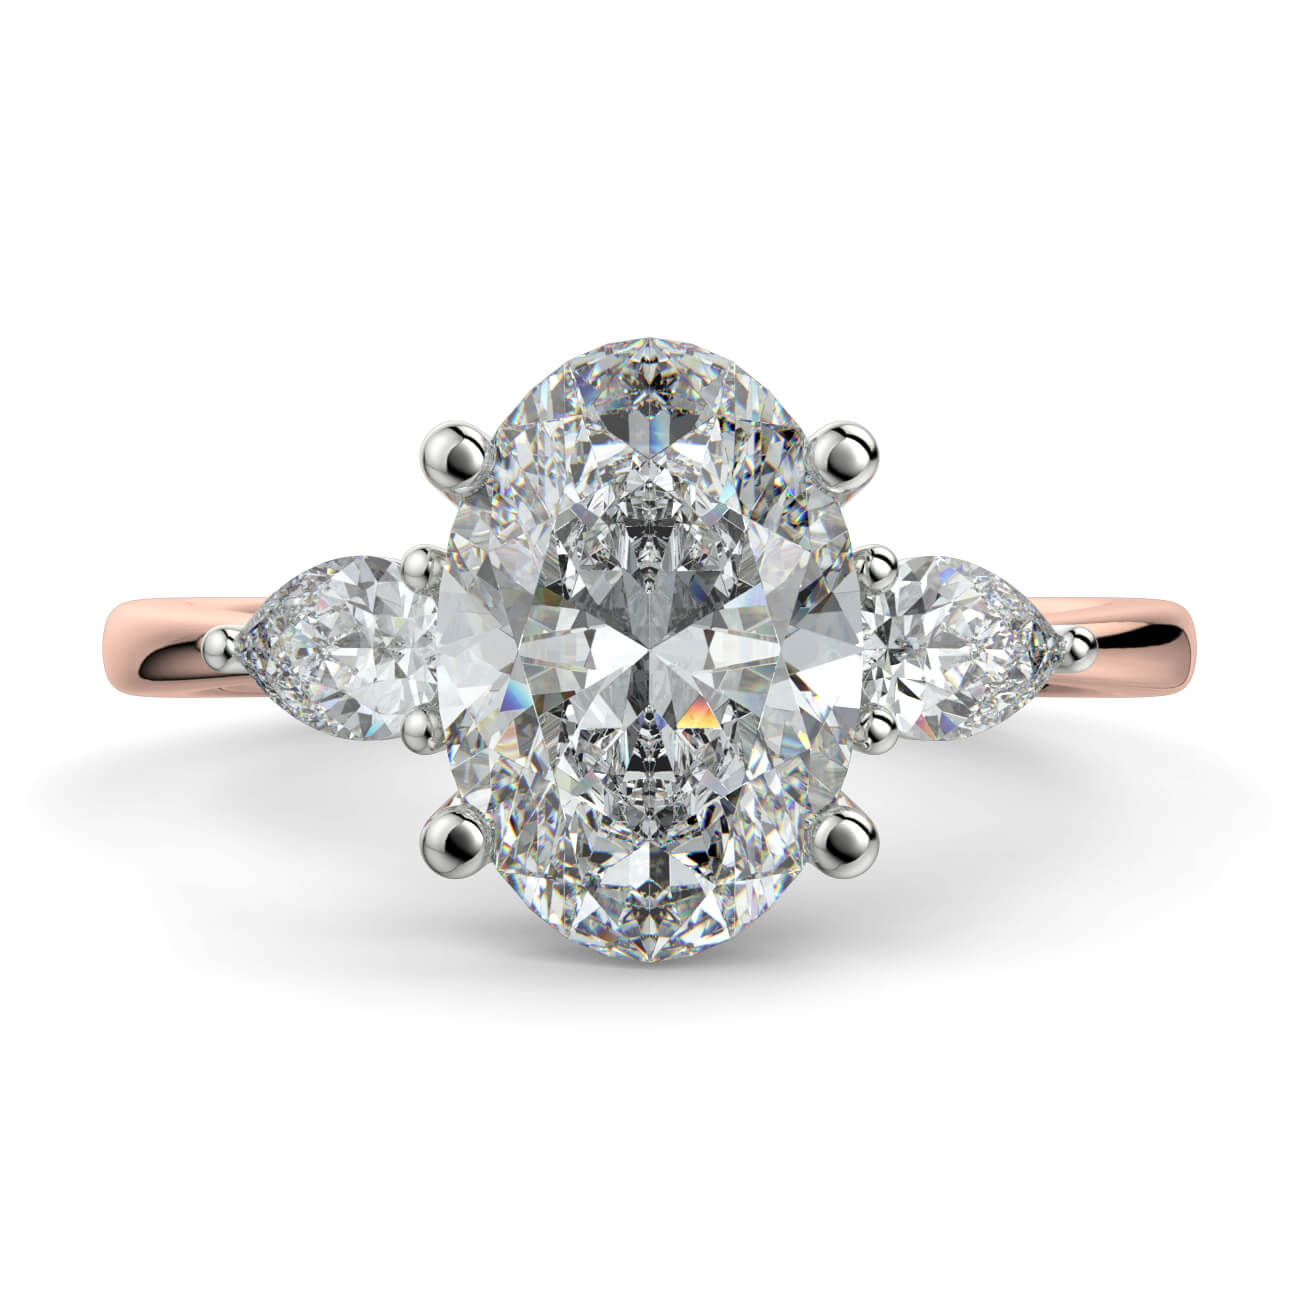 Buy 3.4 Carat Oval Cut Diamond Engagement Ring, Real Diamond, 14K Rose Gold  Ring, E VS1 Oval Natural Diamond Engagement Ring, Certified Diamond Online  in India - Etsy